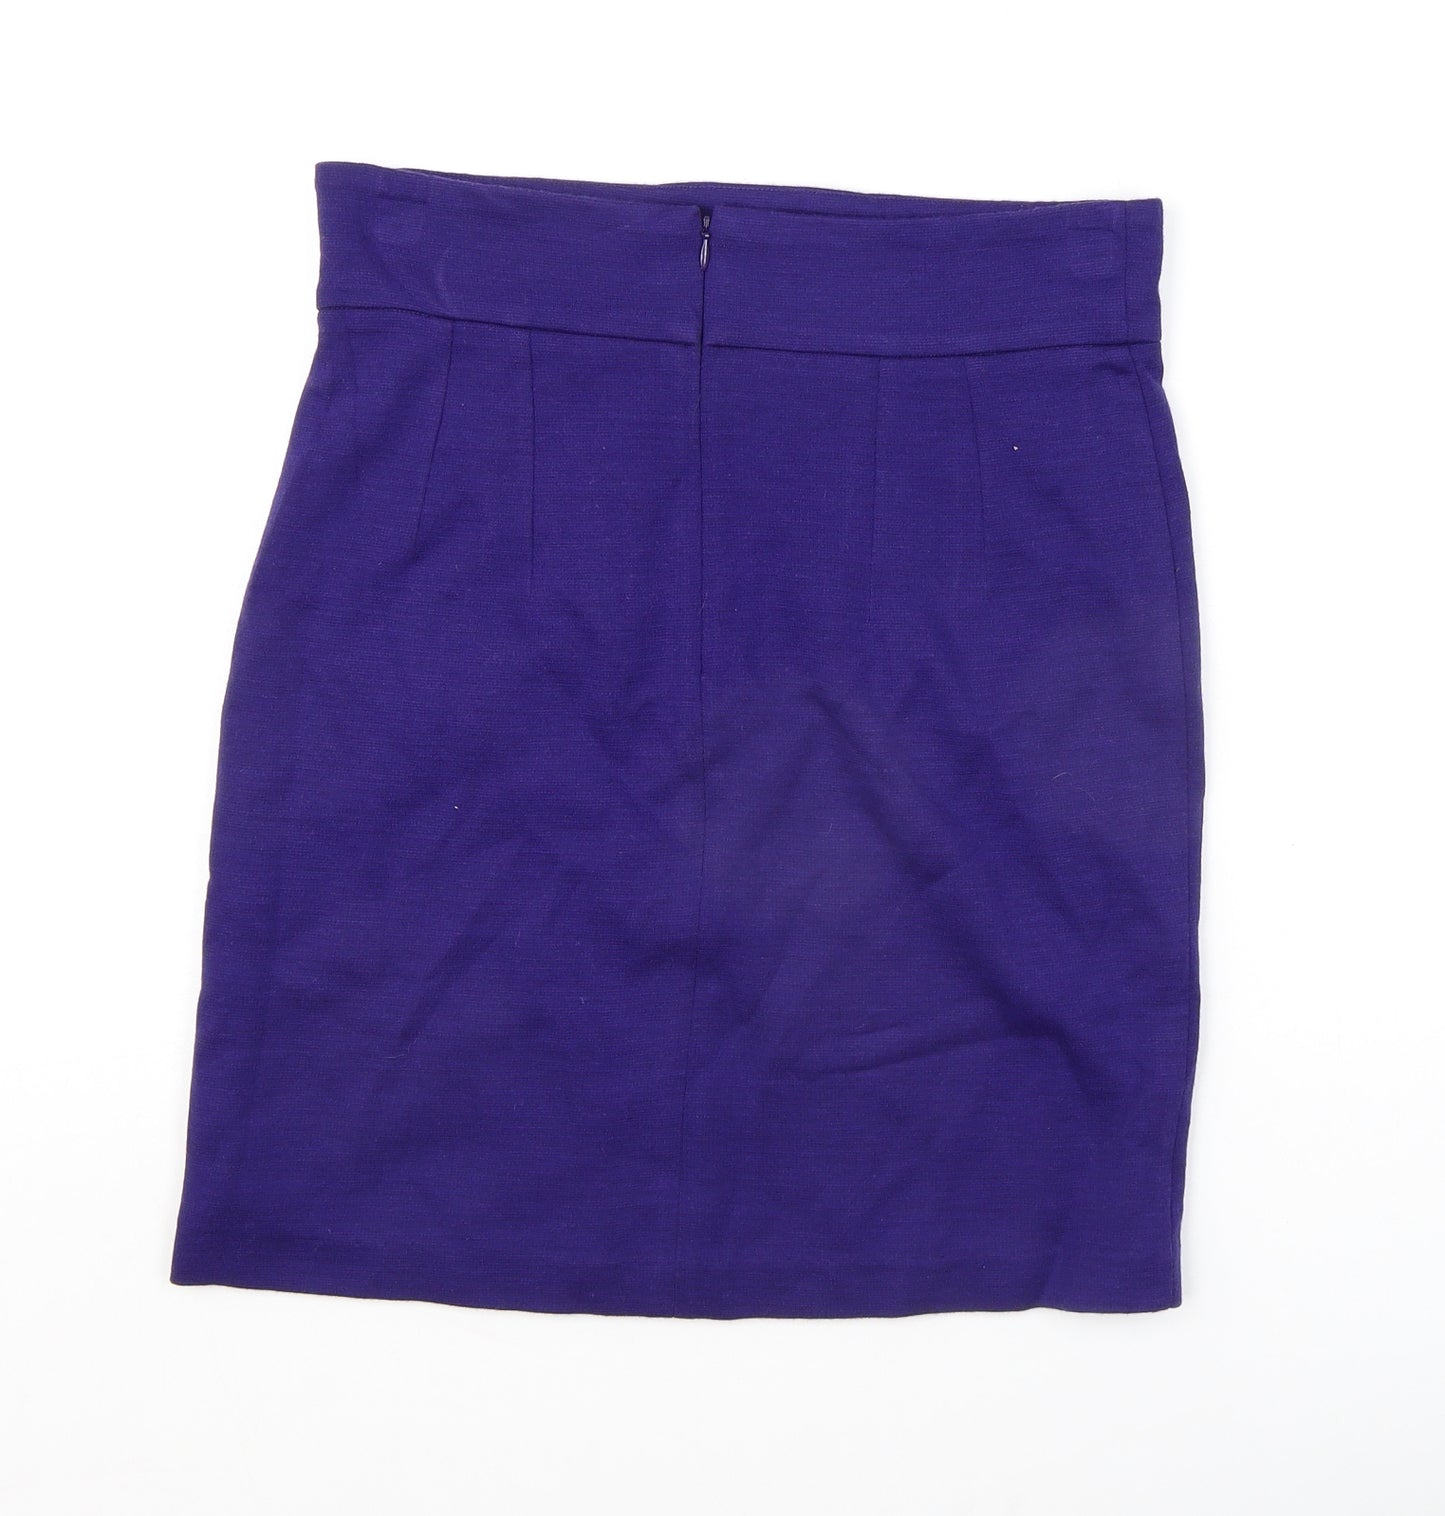 PAUL & JOE Womens Purple Acrylic A-Line Skirt Size 14 Zip